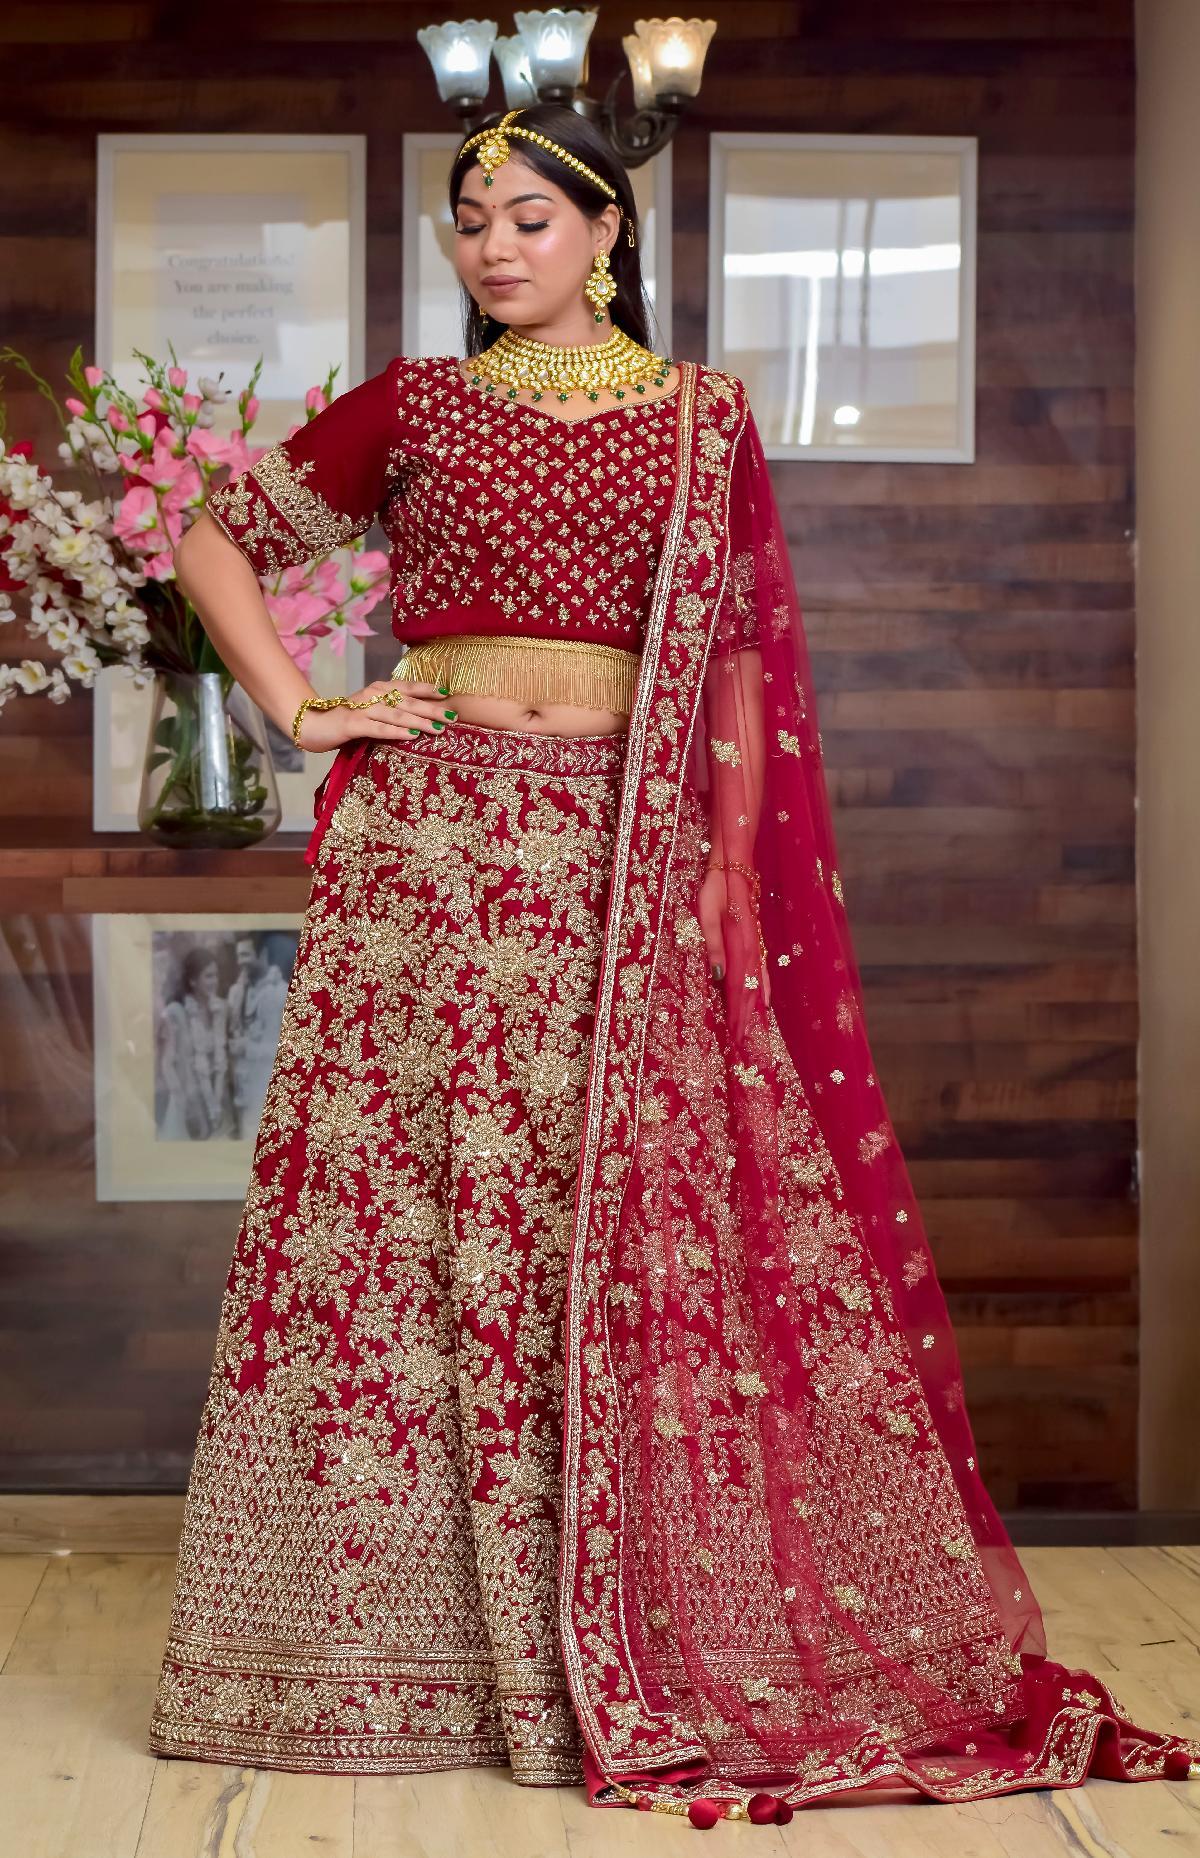 Indian Bridal Lehenga - Gulmohar Red Lehenga by B Anu Designs